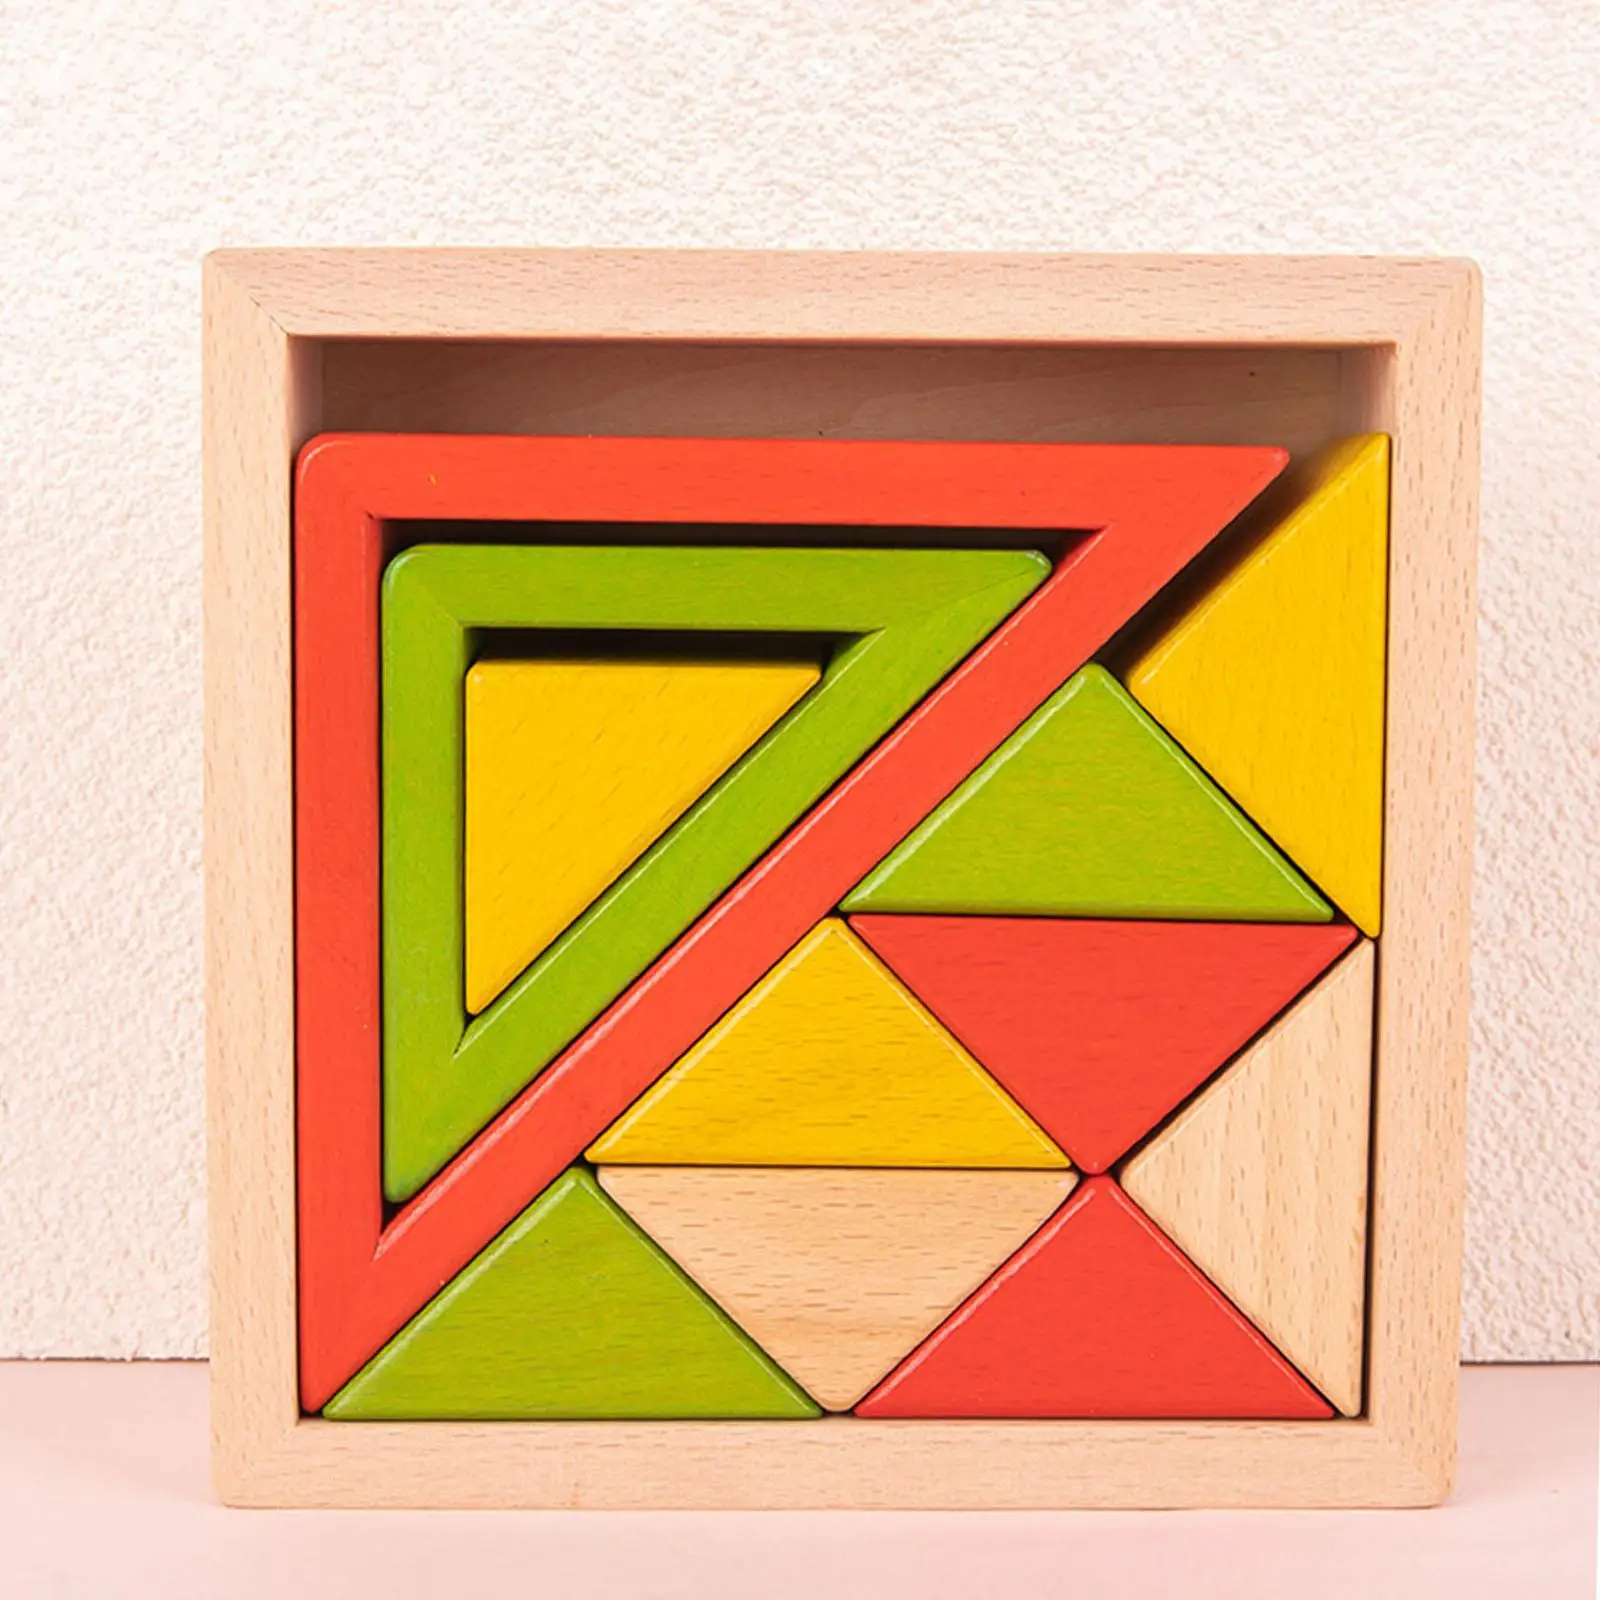 Wooden Stacker Nesting Puzzle Blocks Montessori Stacking Game for Preschool Boys Girls